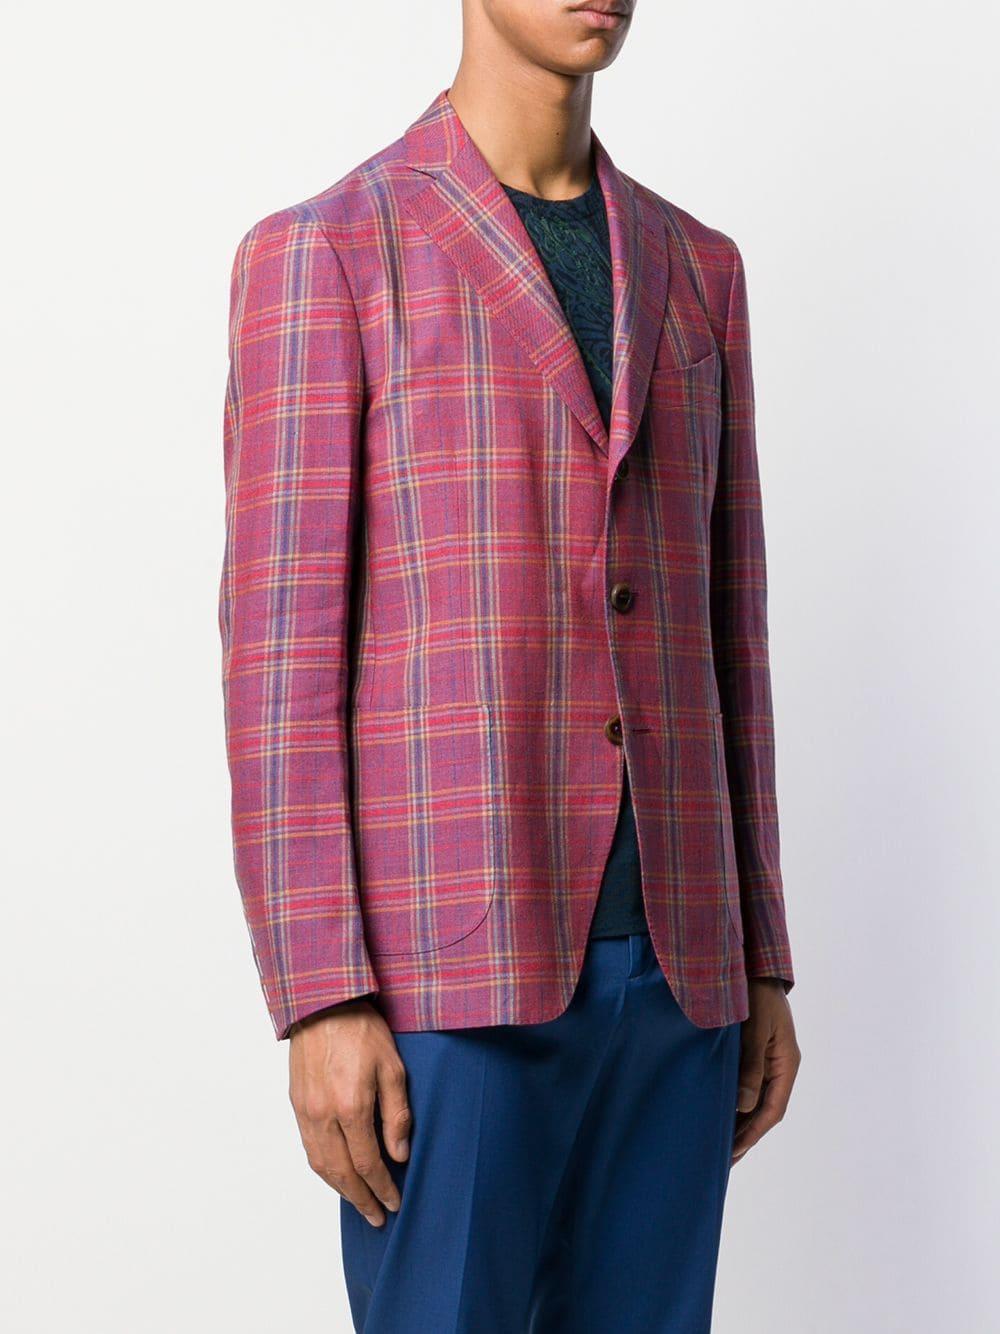 Etro Wool Tartan Blazer in Pink for Men - Lyst